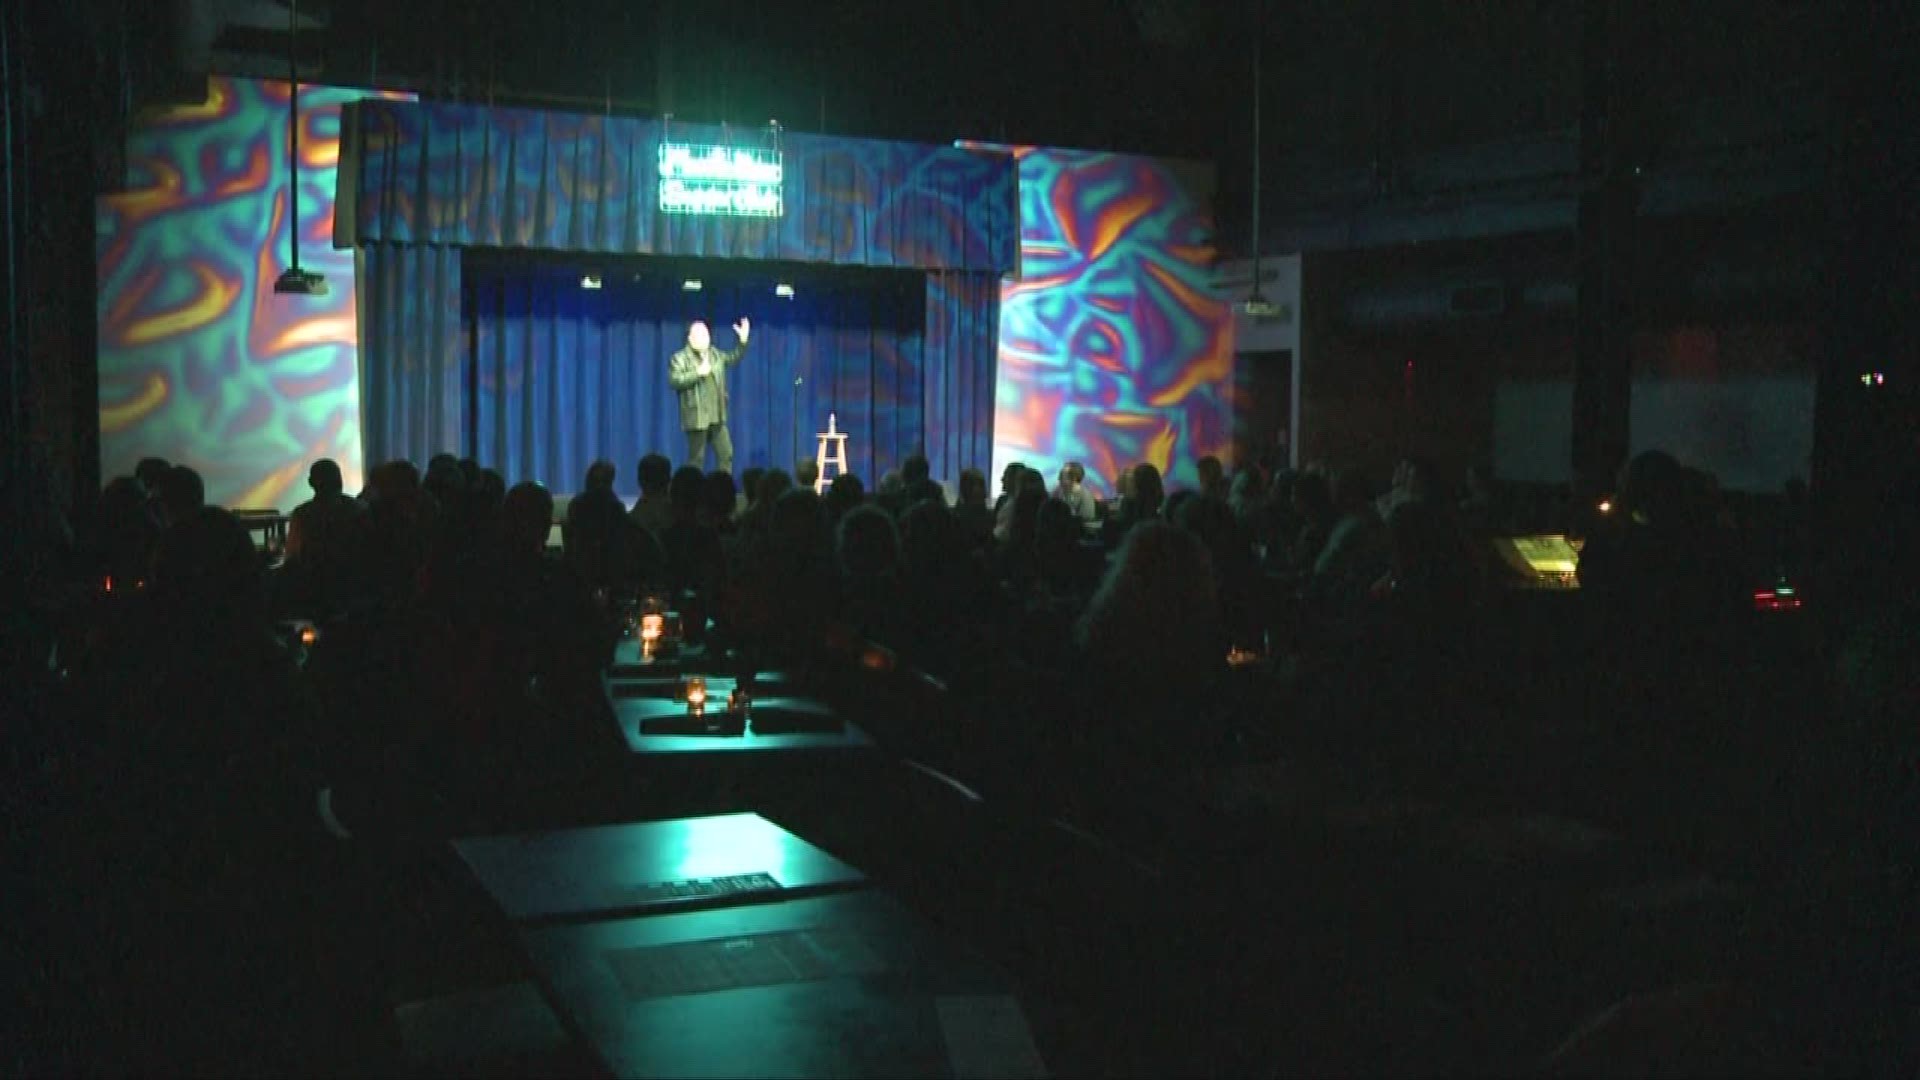 Comedy event raises money for Ohio Guidestone